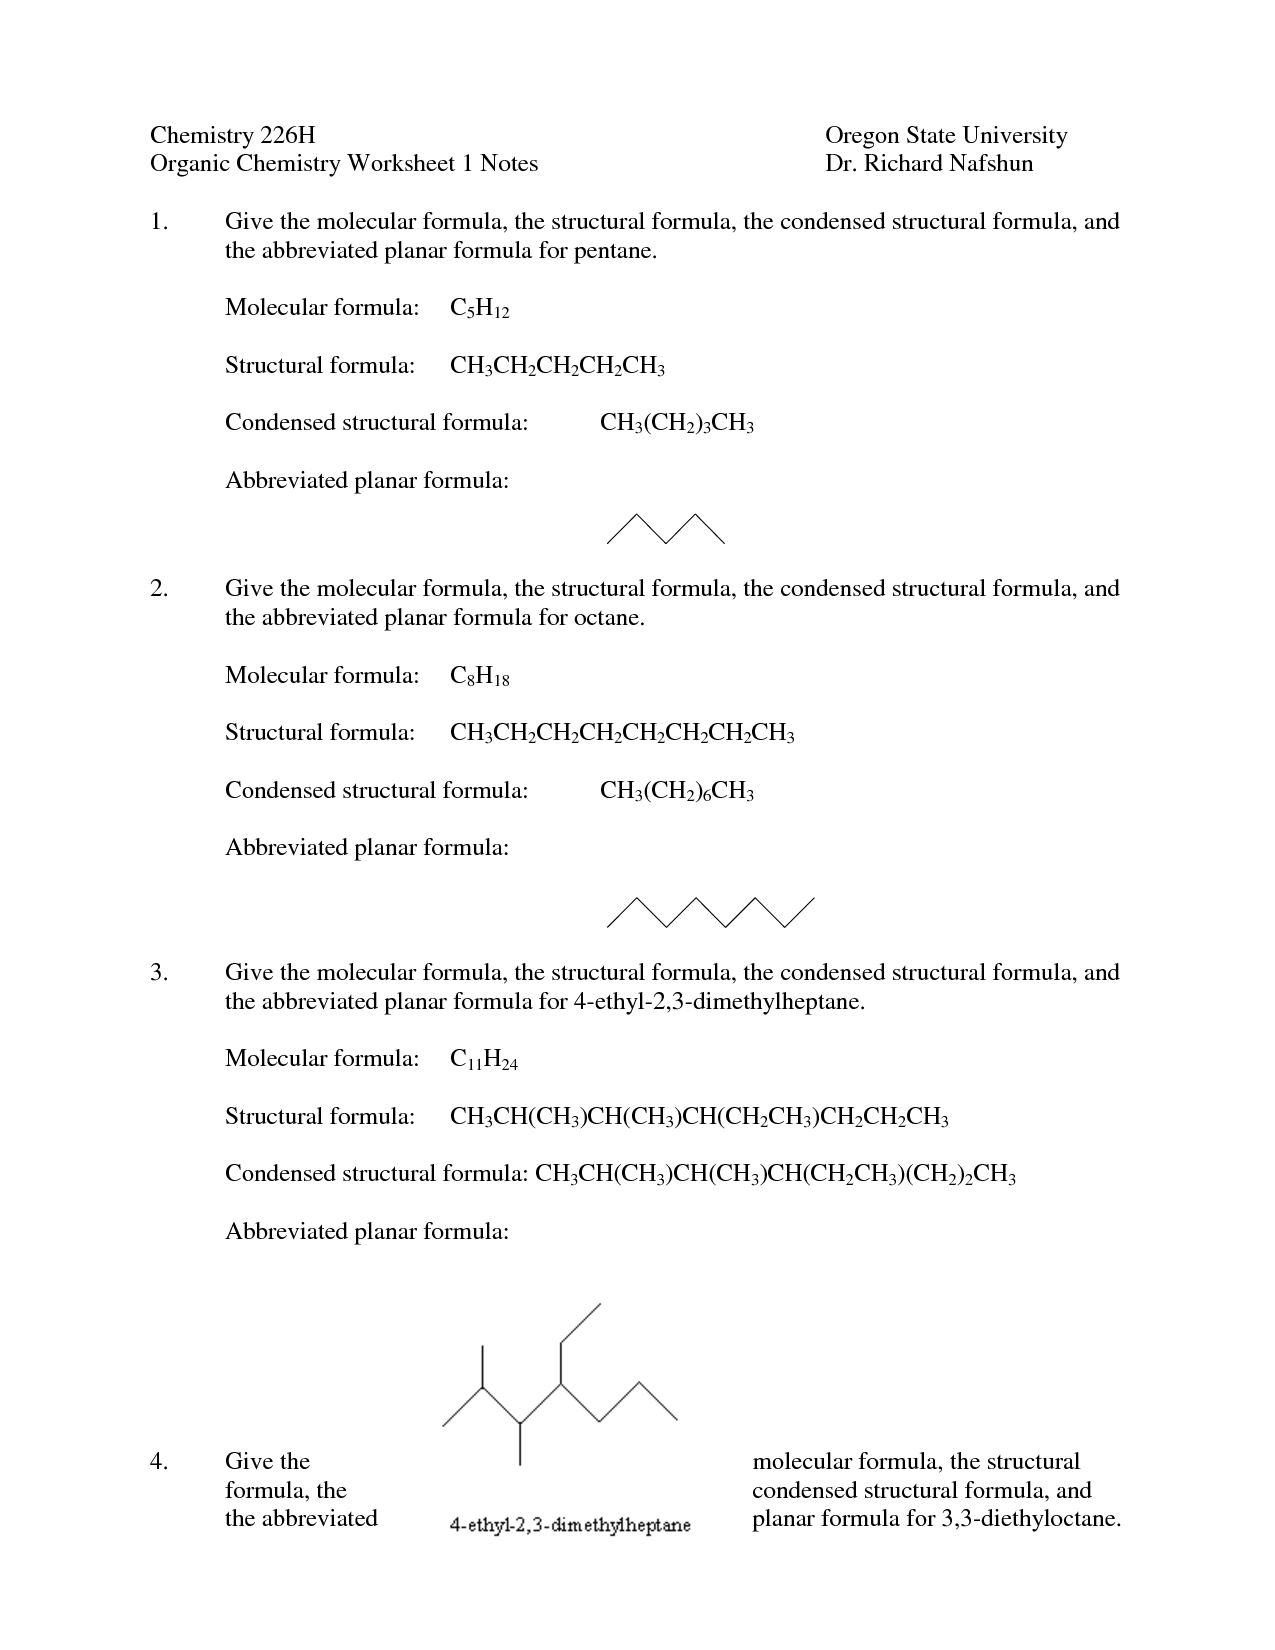 Alcohol Organic Chemistry Worksheet